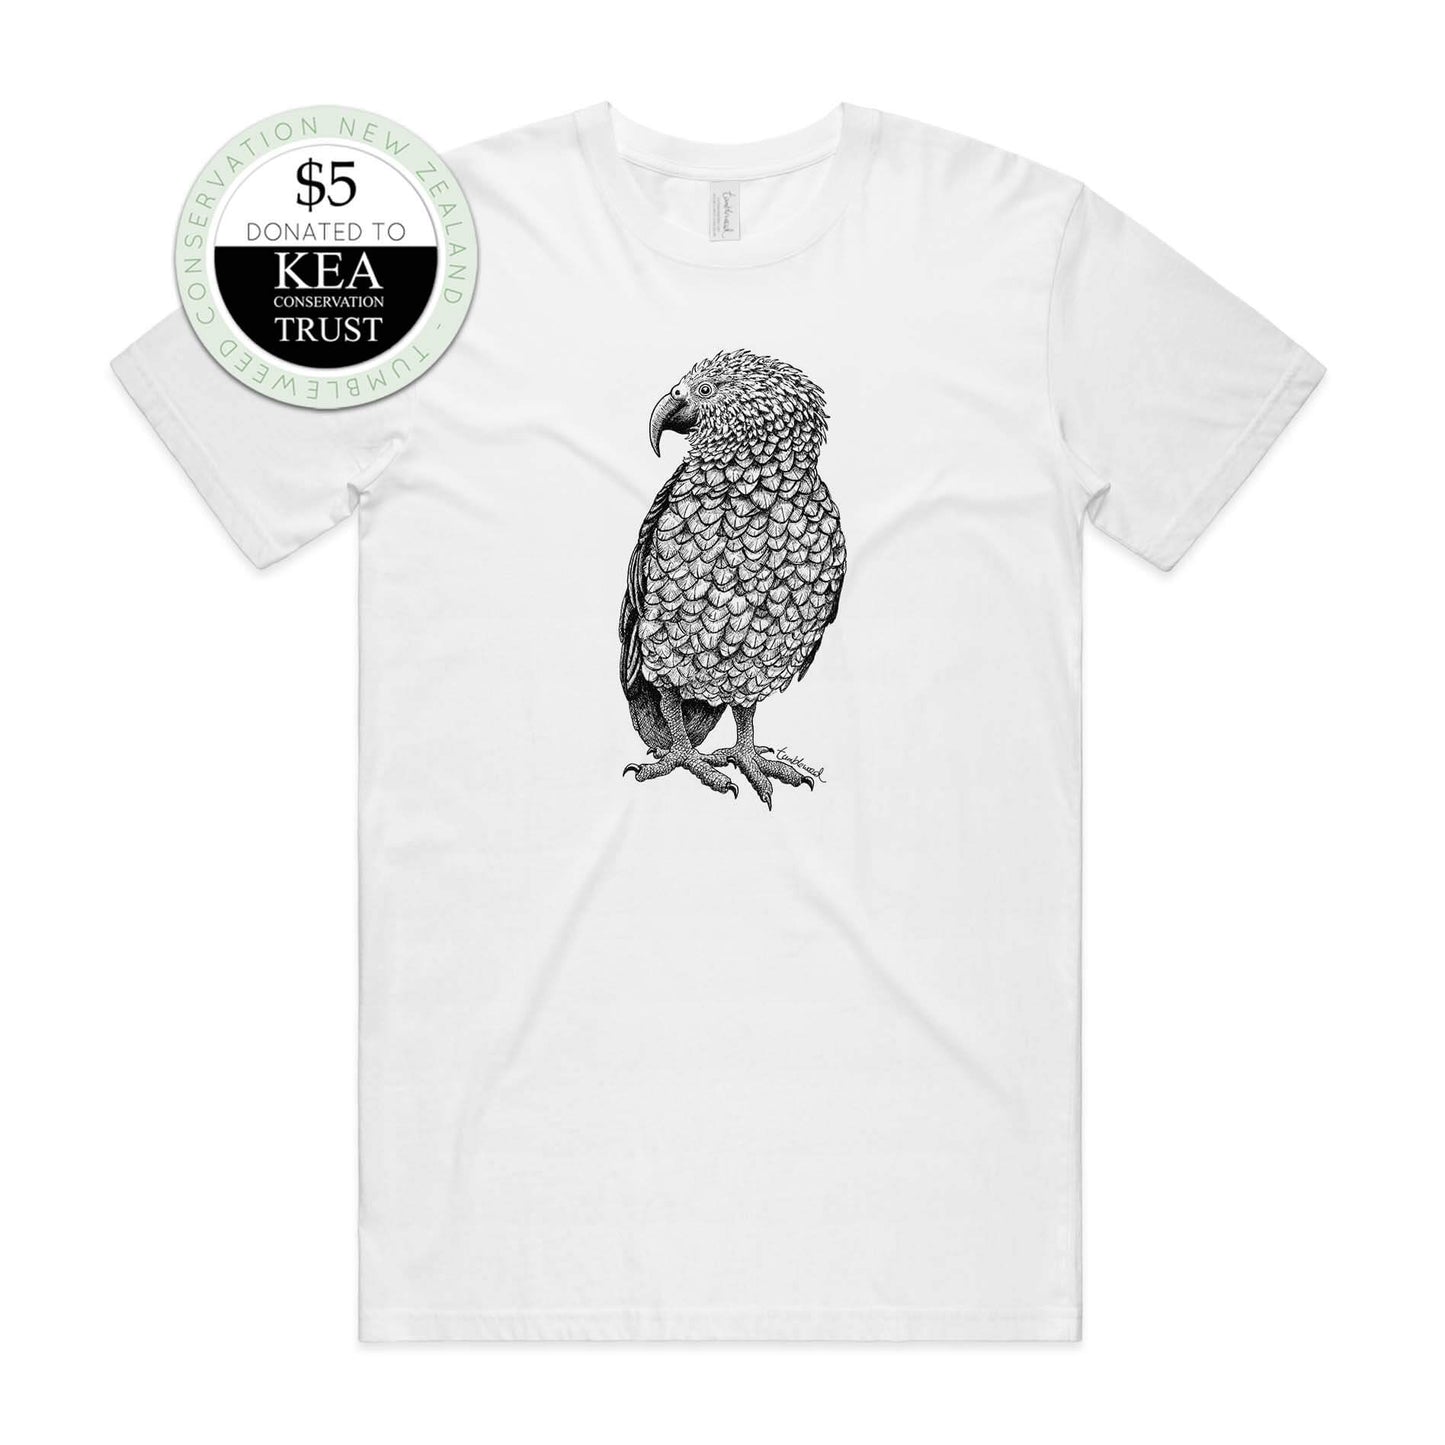 Grey marle, female t-shirt featuring a screen printed kea design.